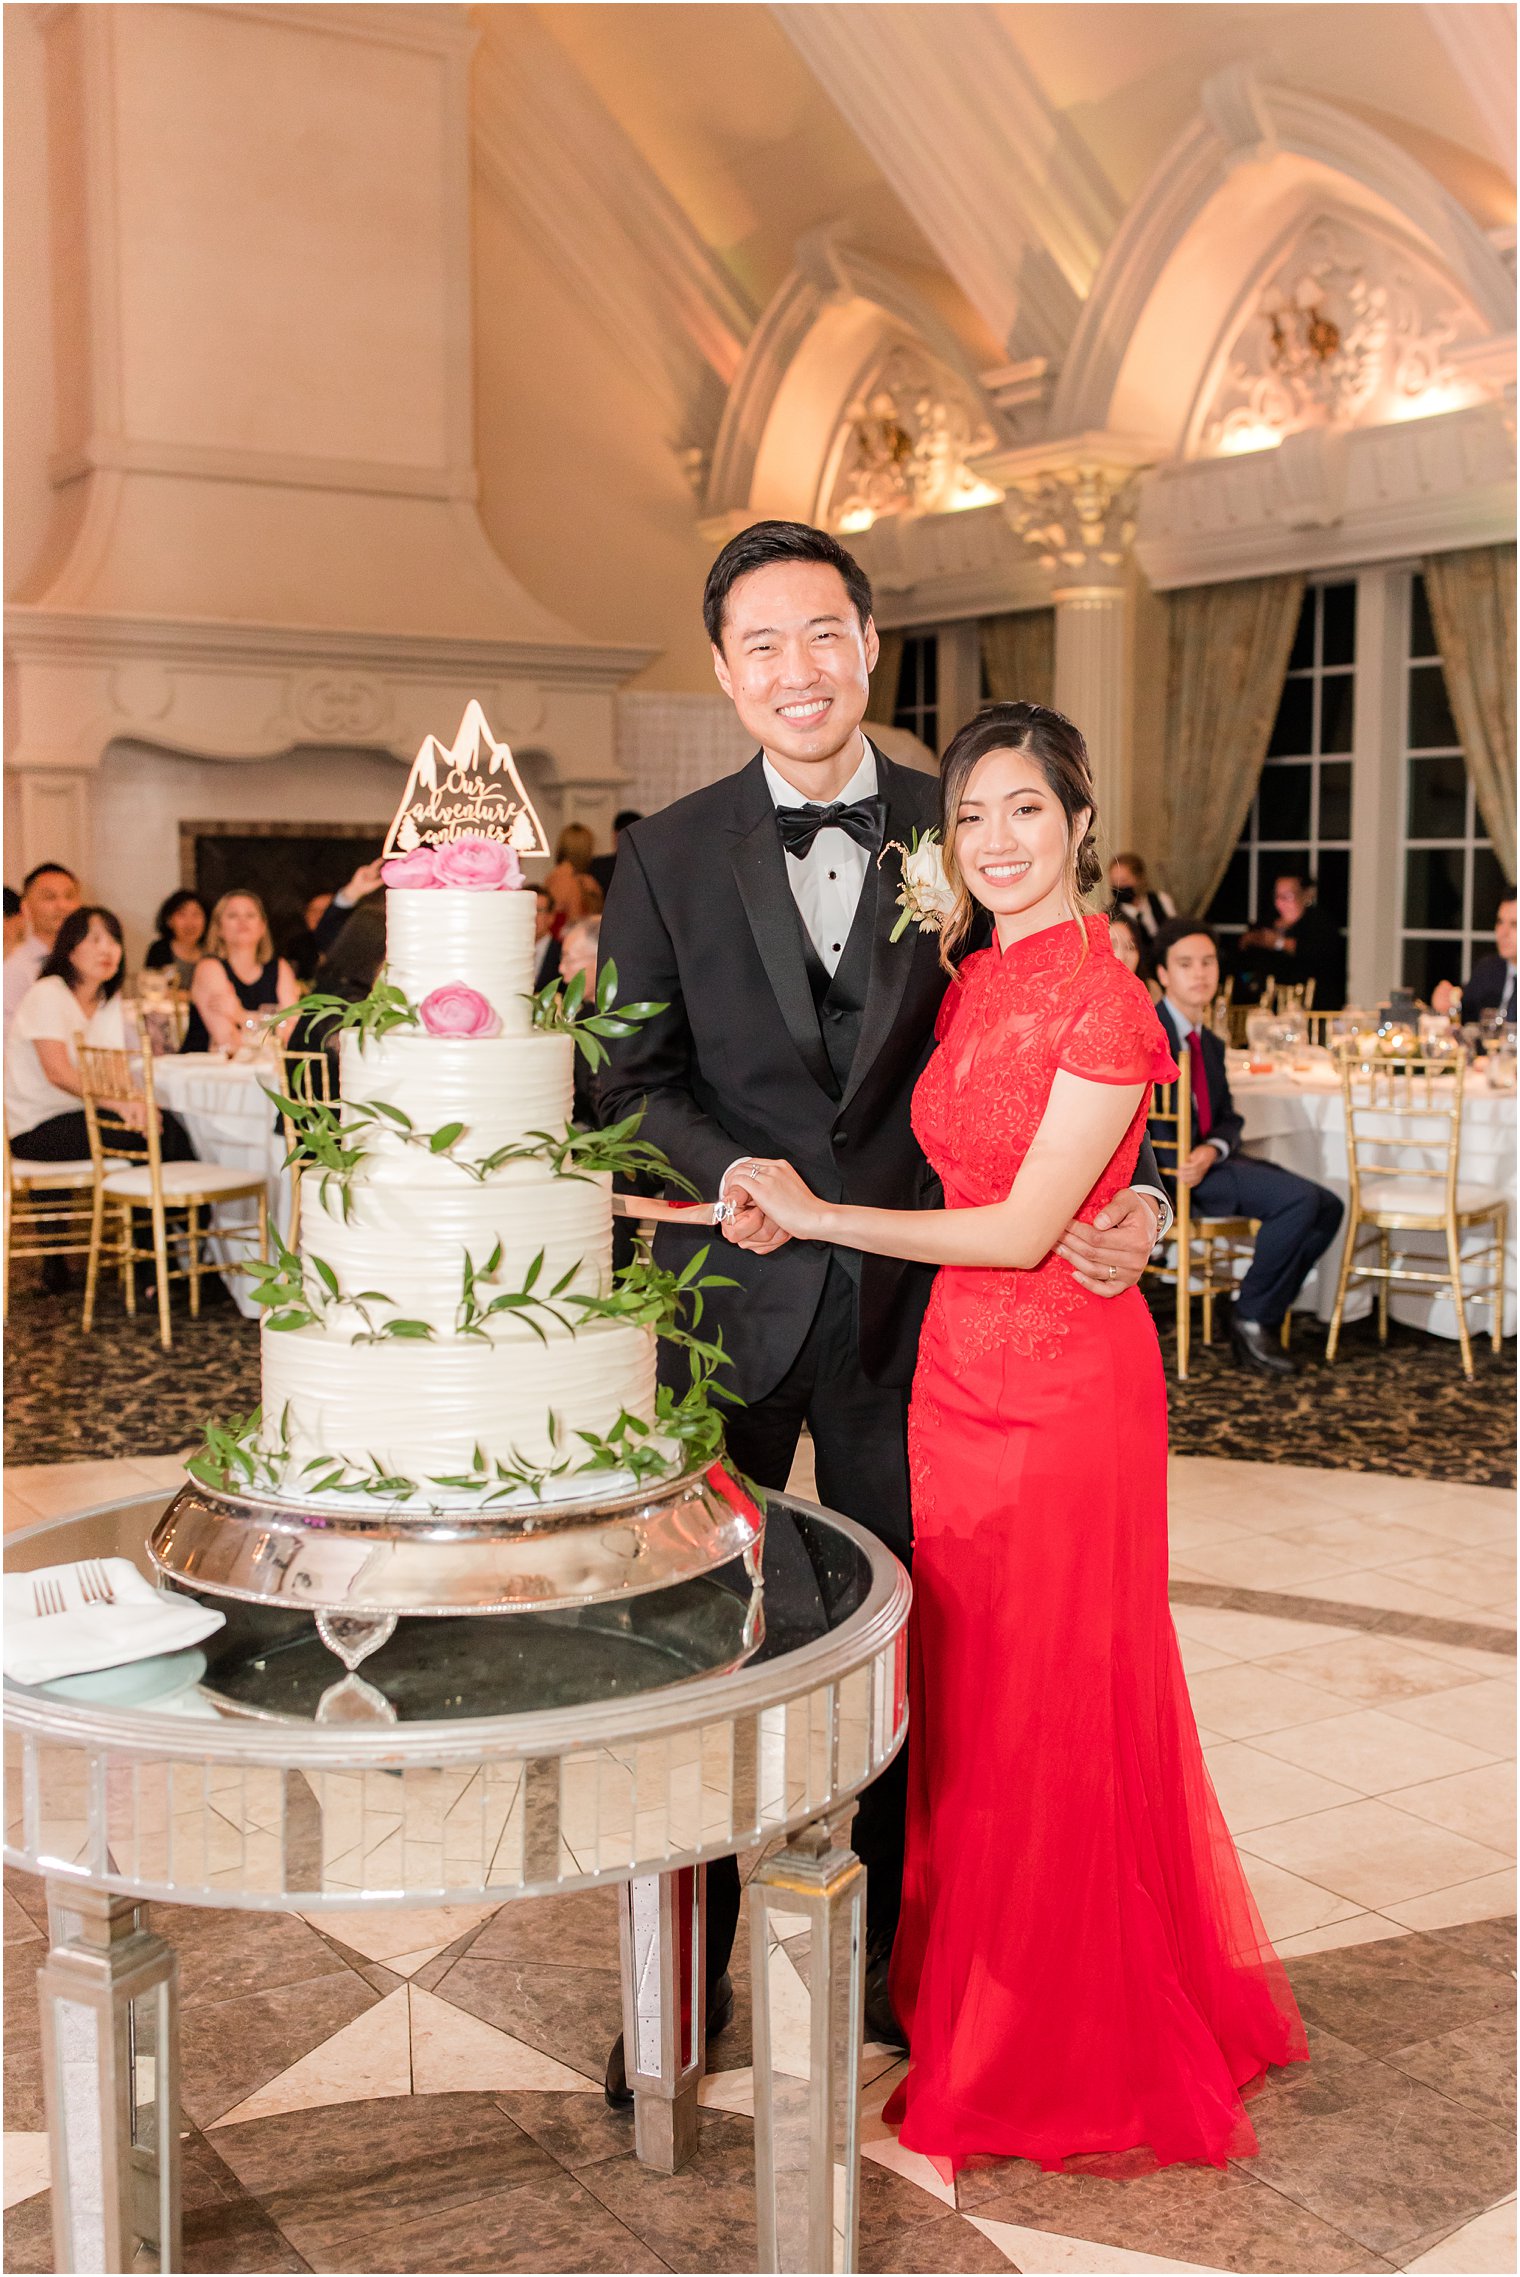 newlyweds pose by tiered wedding cake during Ashford Estate wedding reception